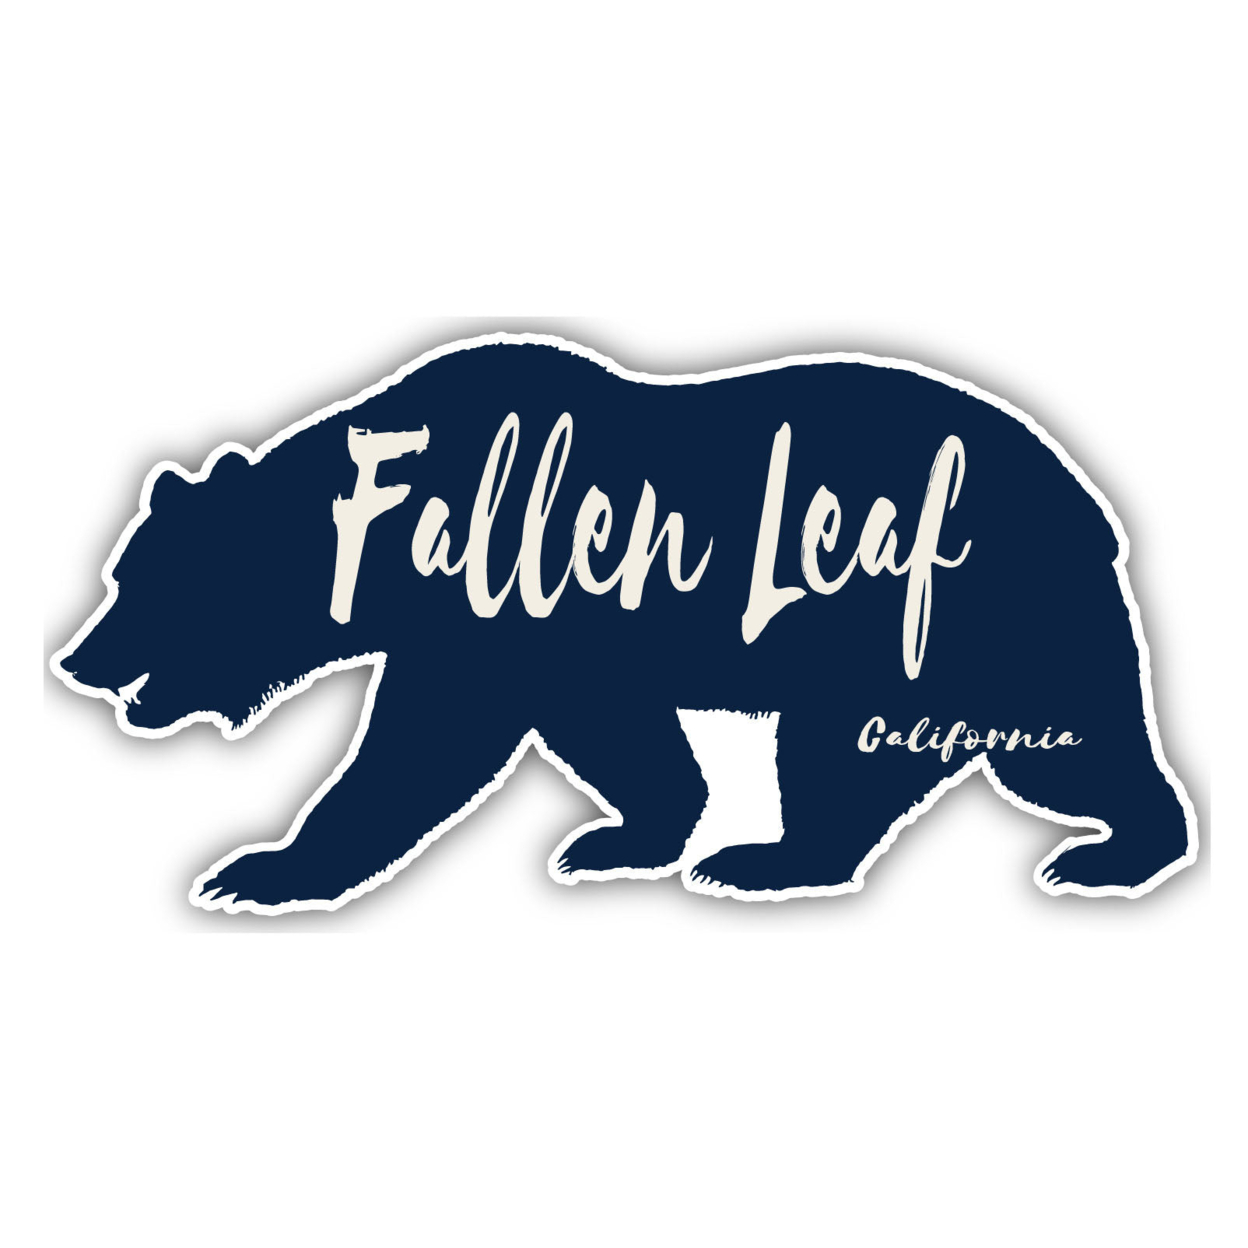 Fallen Leaf California Souvenir Decorative Stickers (Choose Theme And Size) - 4-Pack, 6-Inch, Bear